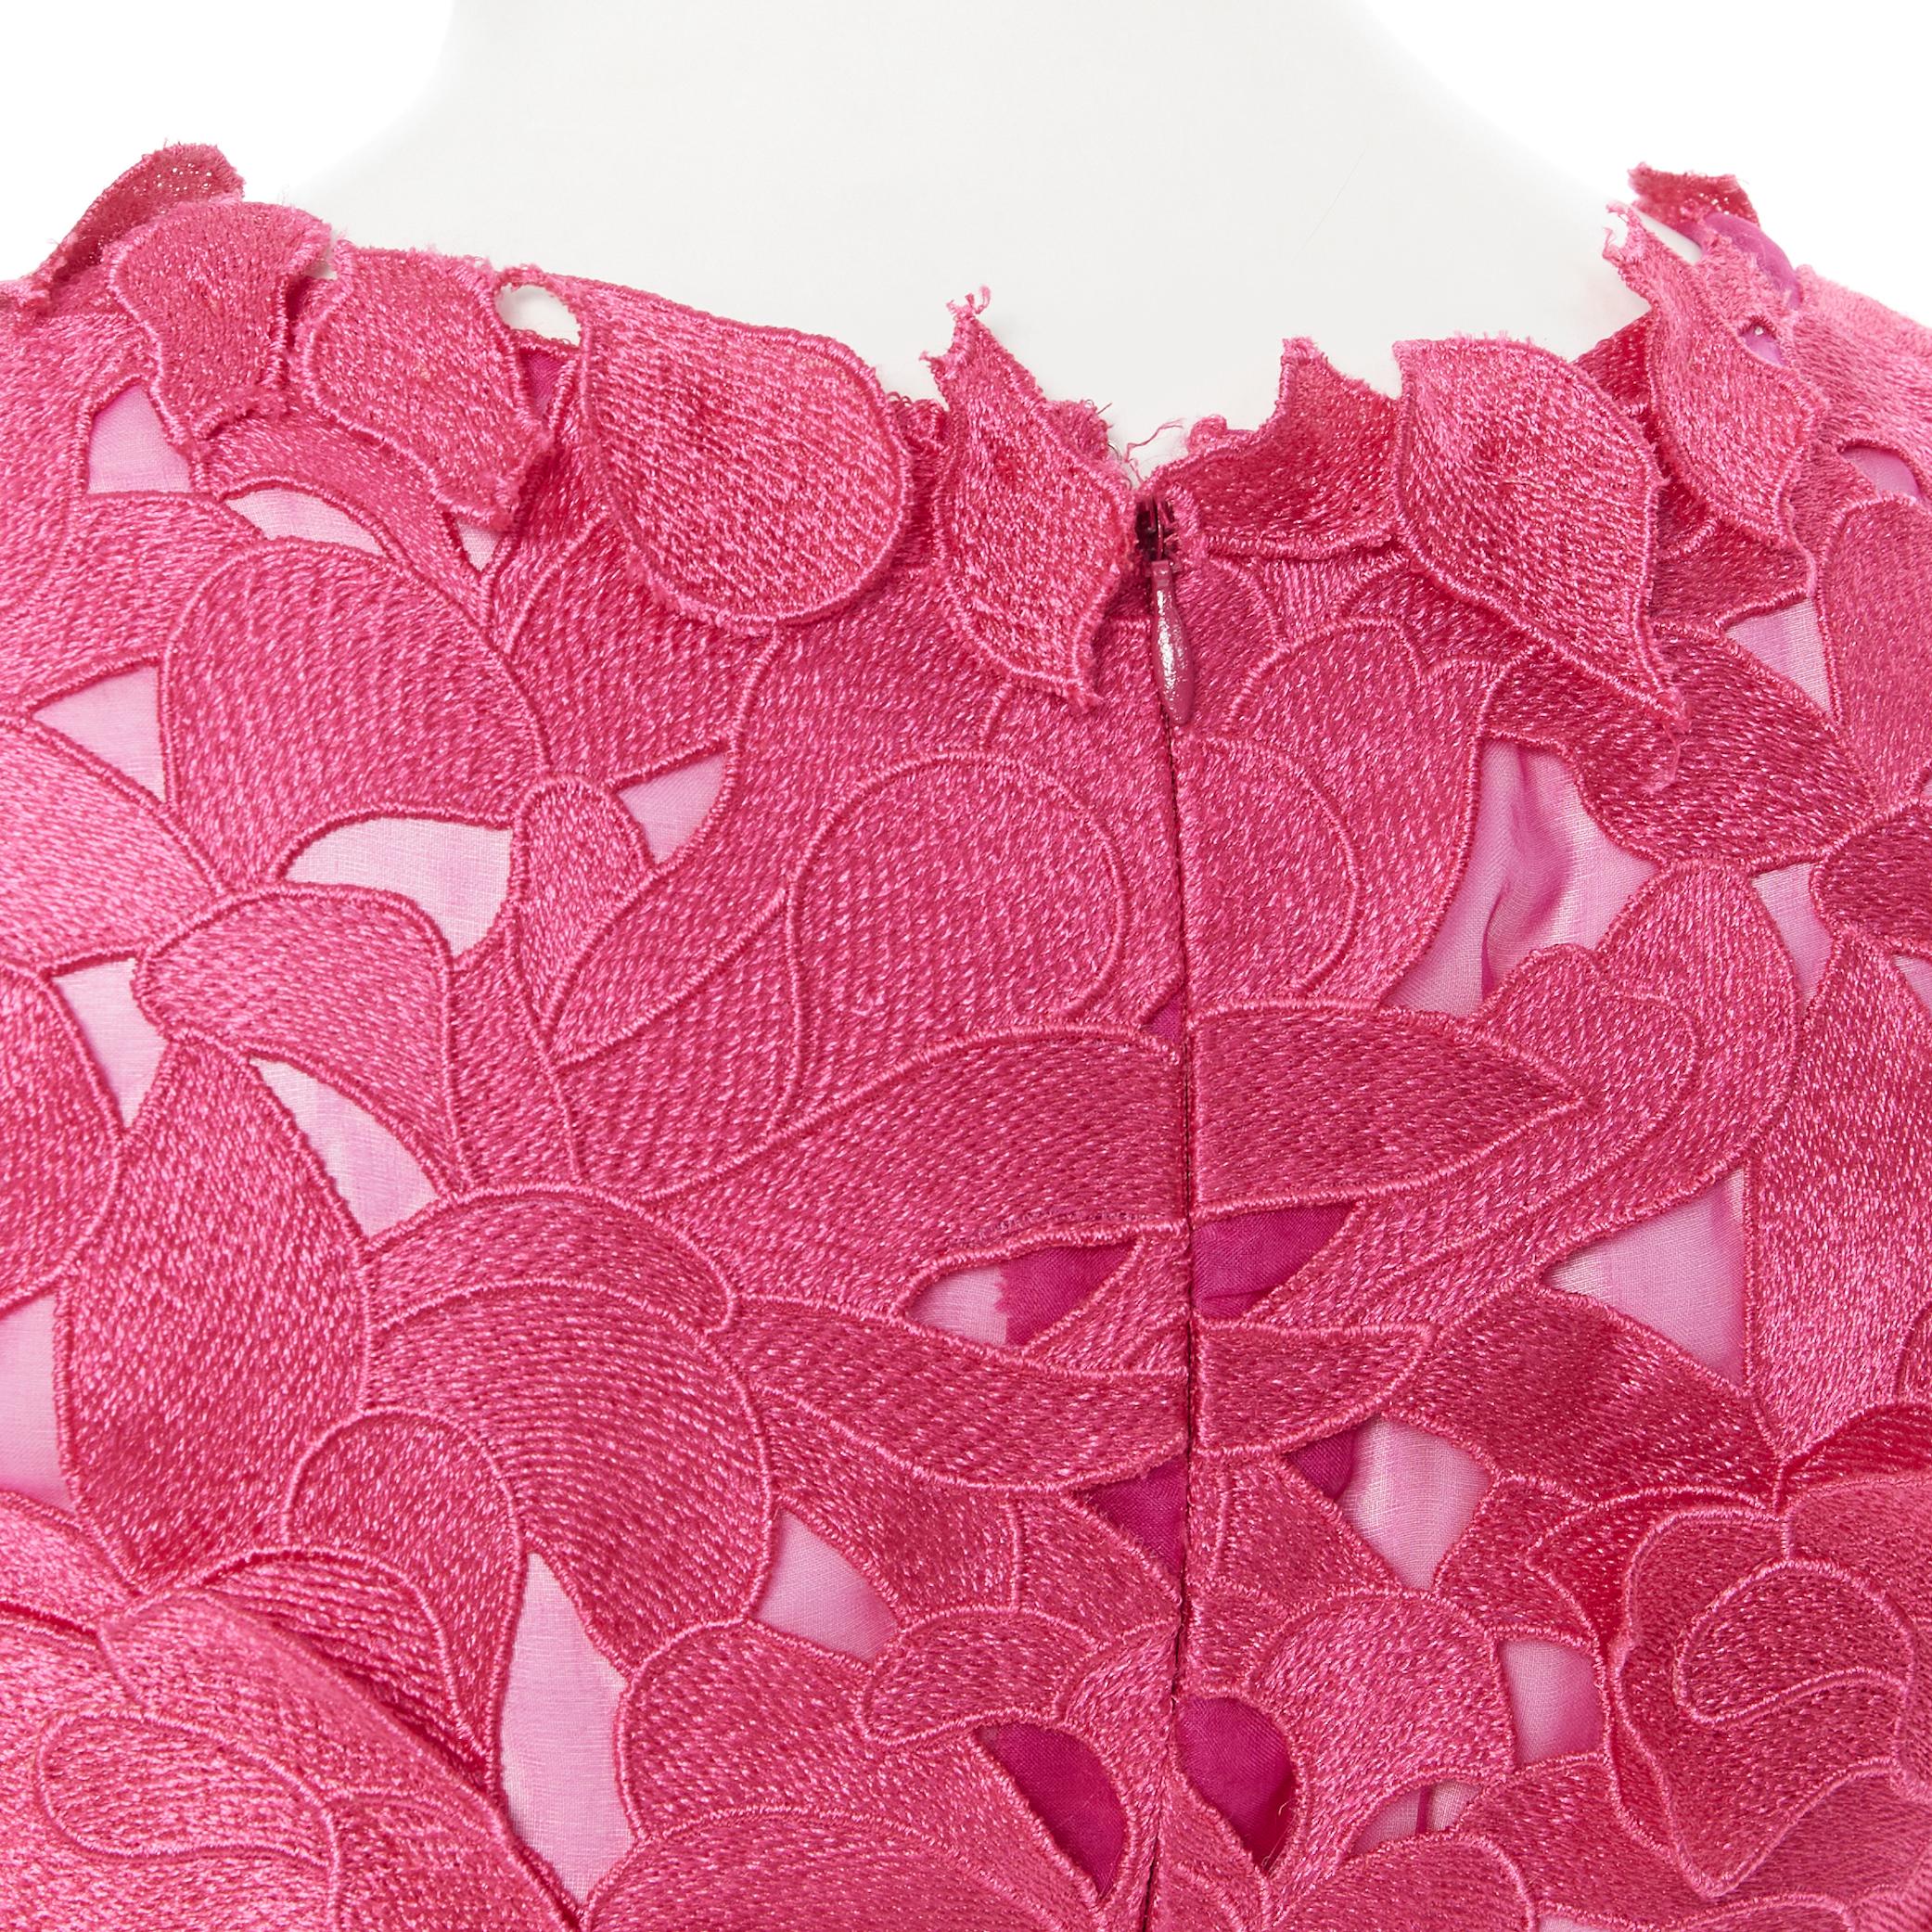 OSCAR DE LA RENTA fuchsia pink floral print 3/4 sleeve cocktail dress XS 2